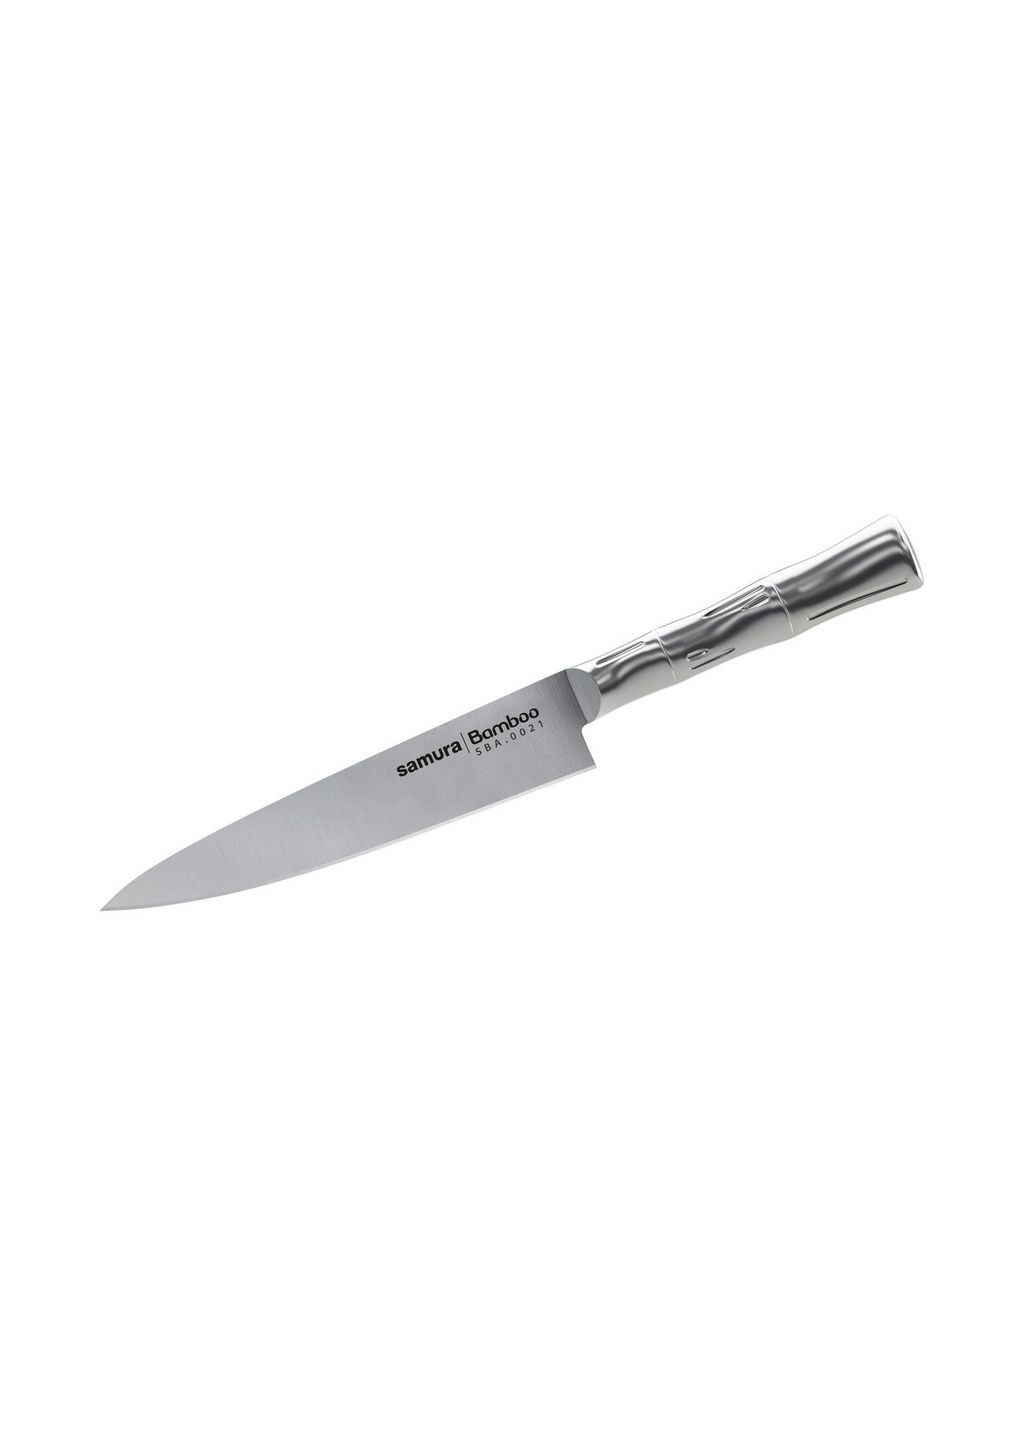 Нож кухонный универсальный 125 мм Samura металлы,